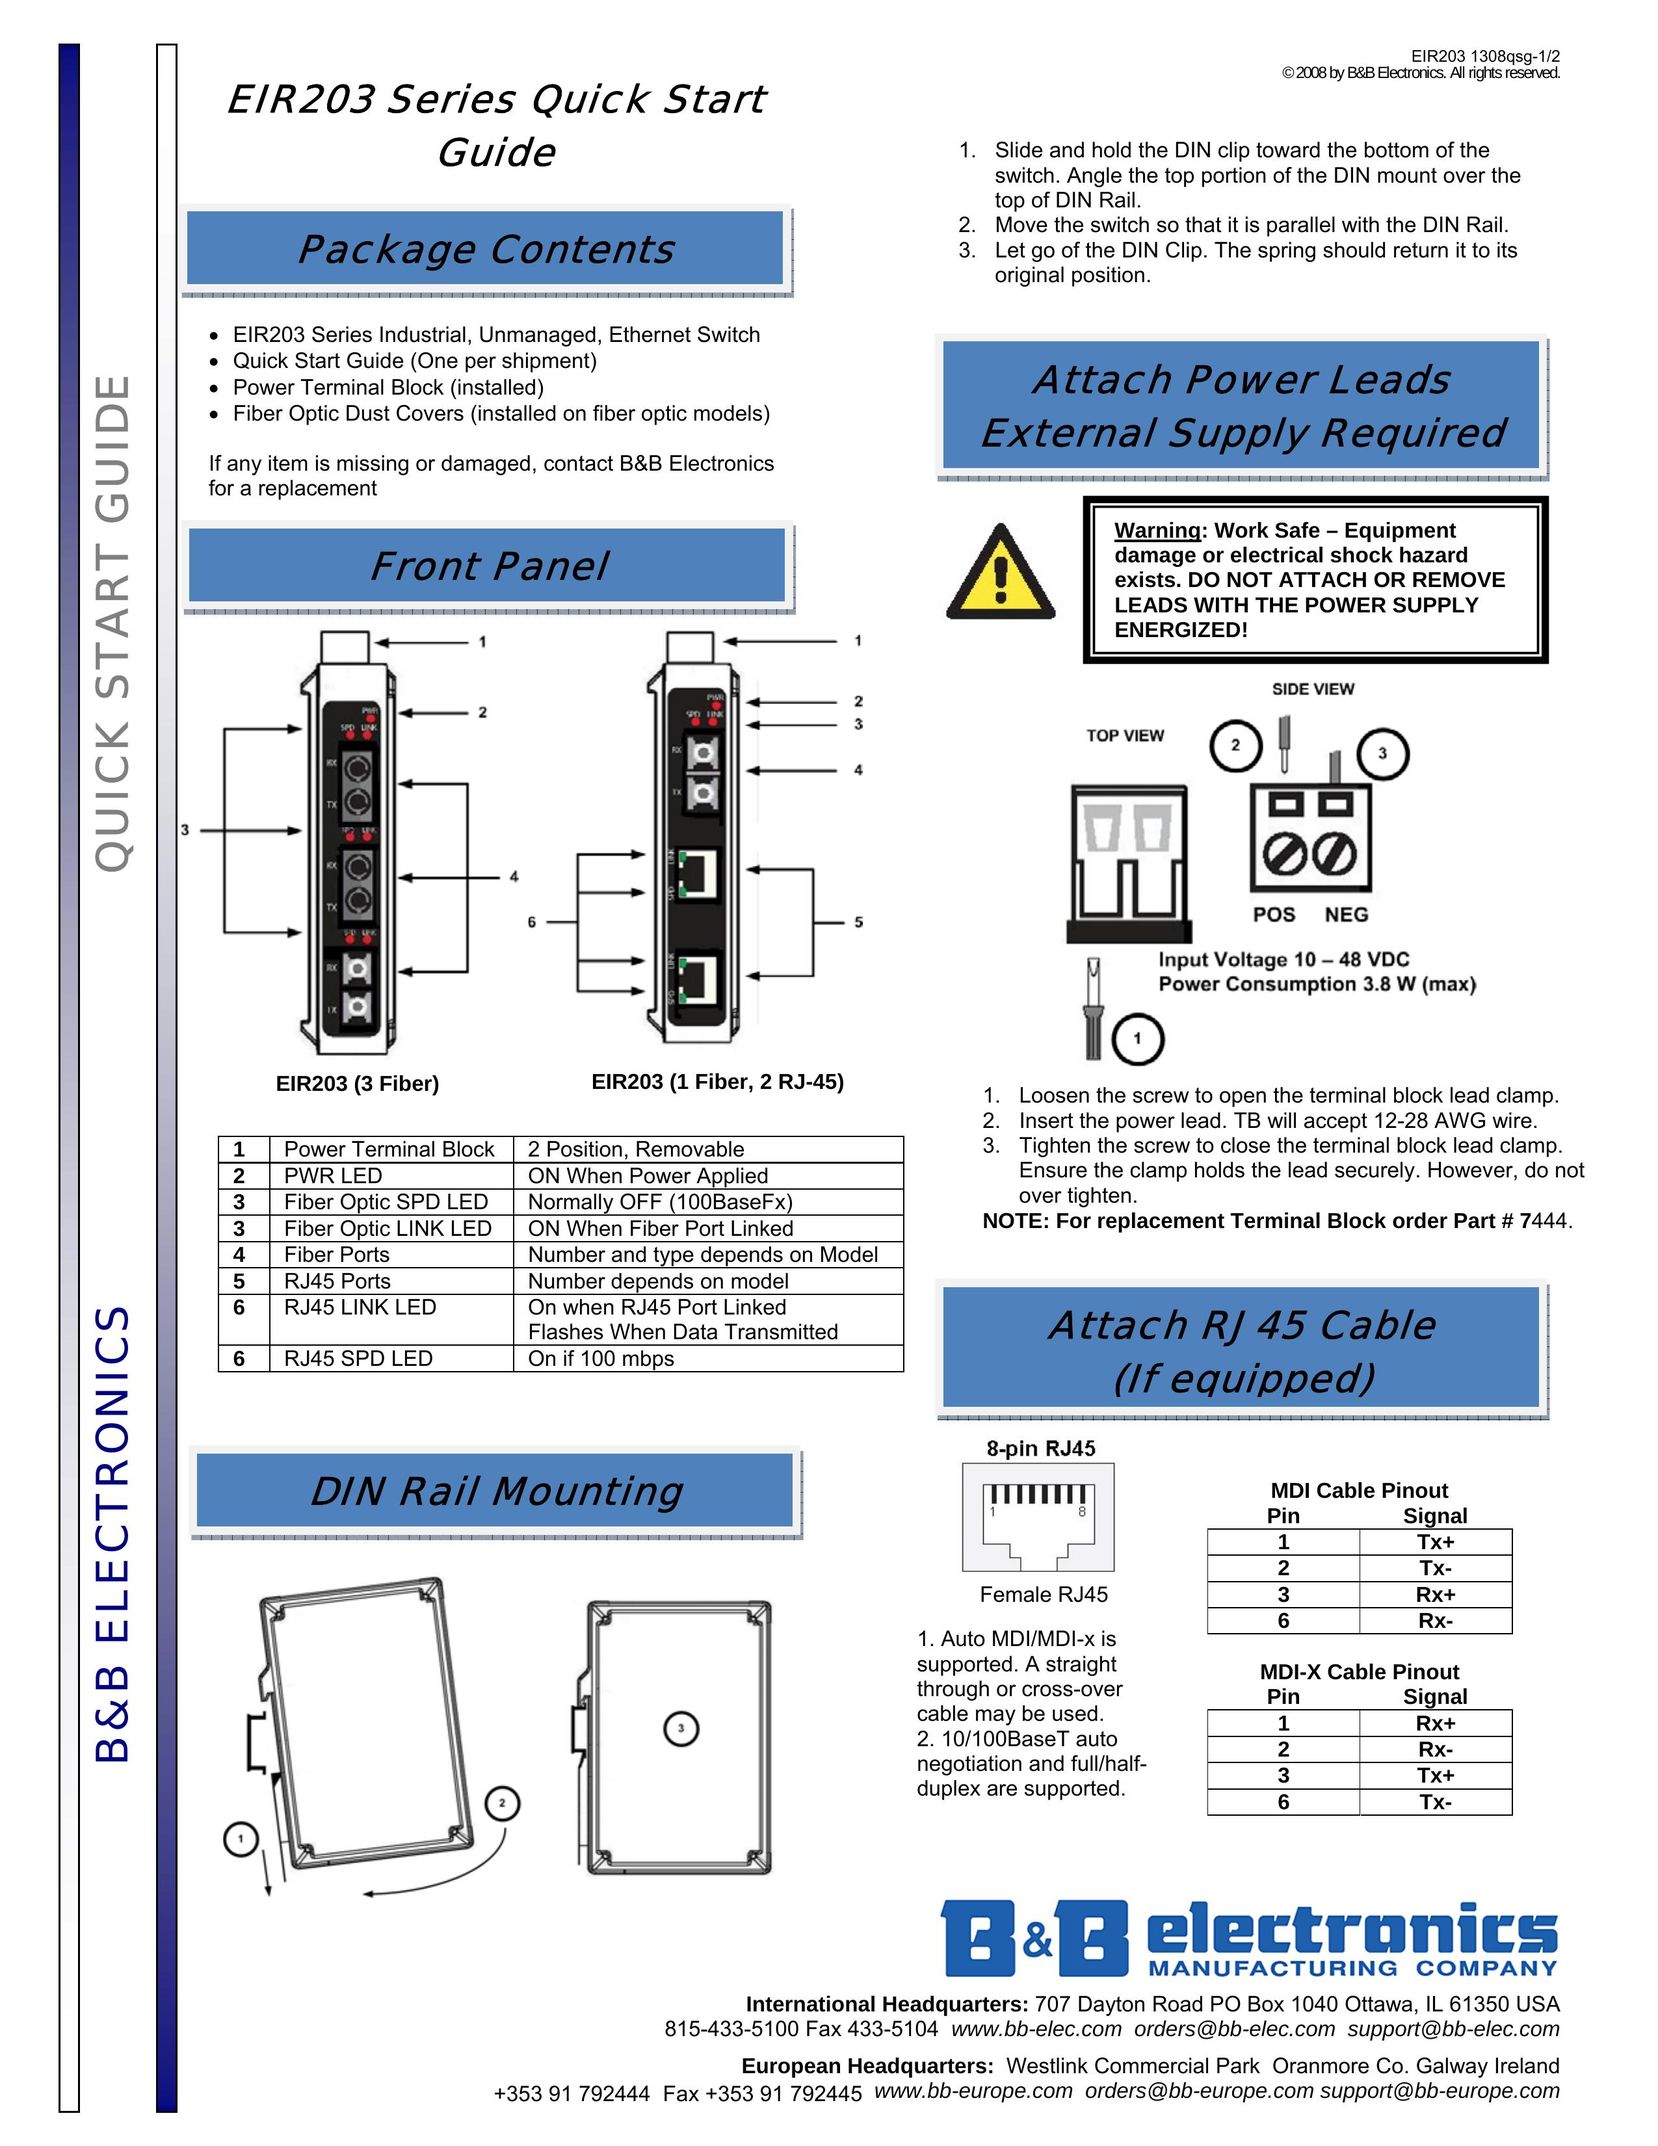 B&B Electronics EIR203-3MT Network Card User Manual